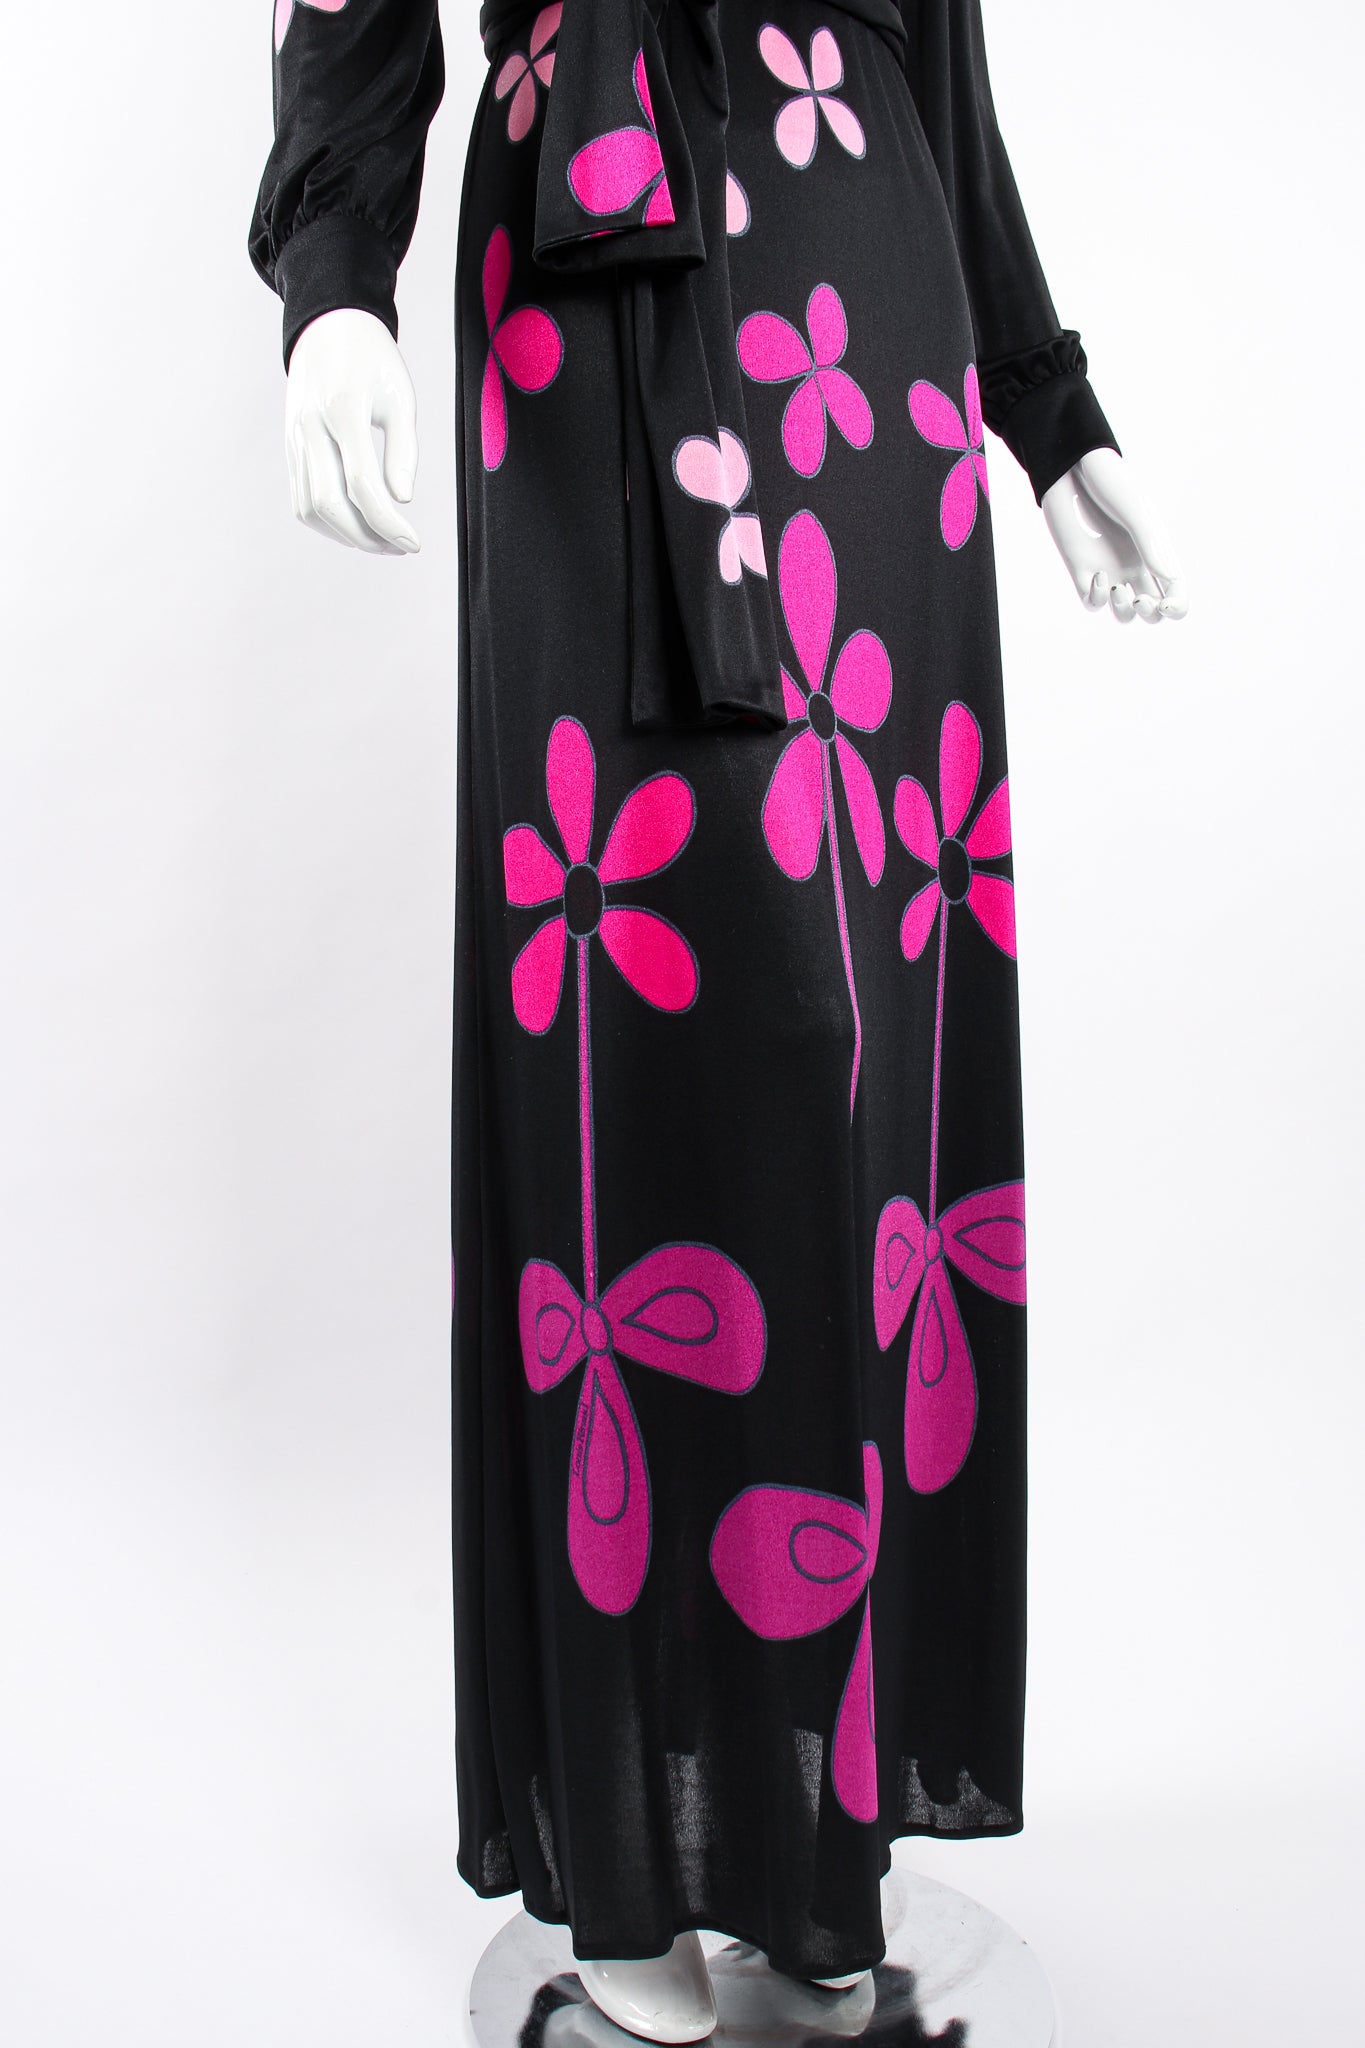 Vintage Louis Feraud Ombré Floral Jersey Dress on Mannequin skirt at Recess Los Angeles